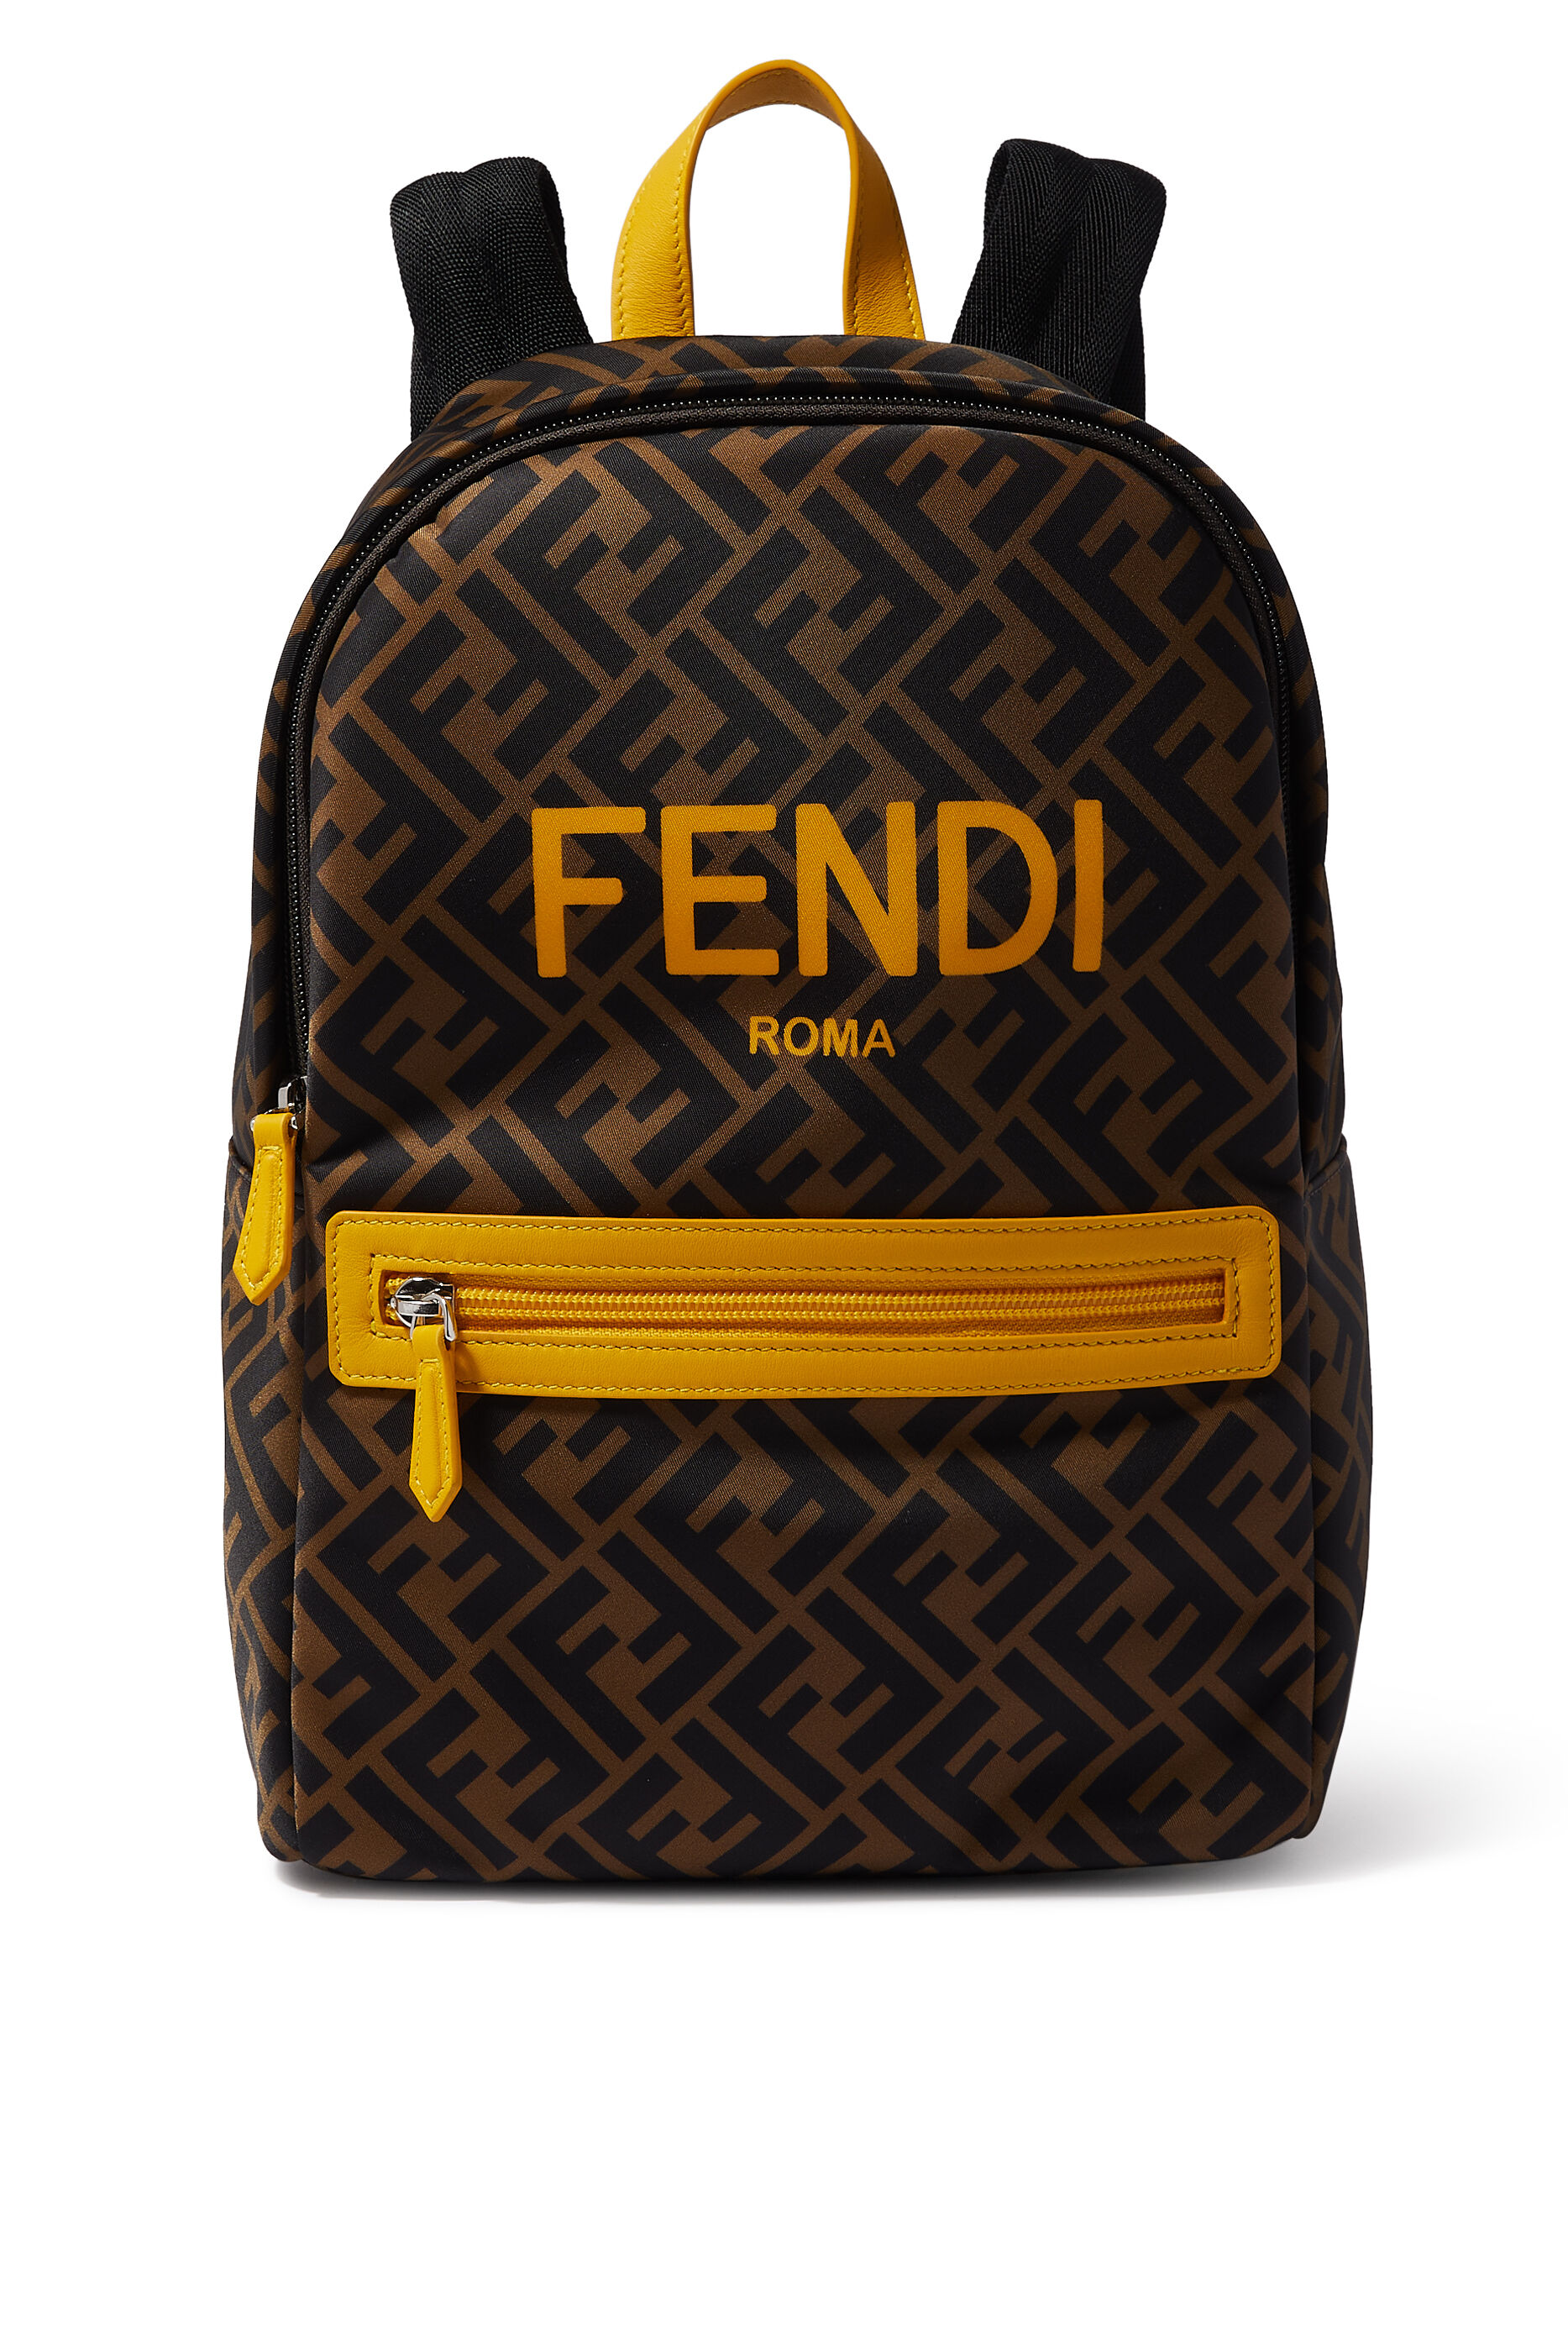 Fendi Floral Appliqu Leather Backpack Black, $3,300 | Neiman Marcus |  Lookastic